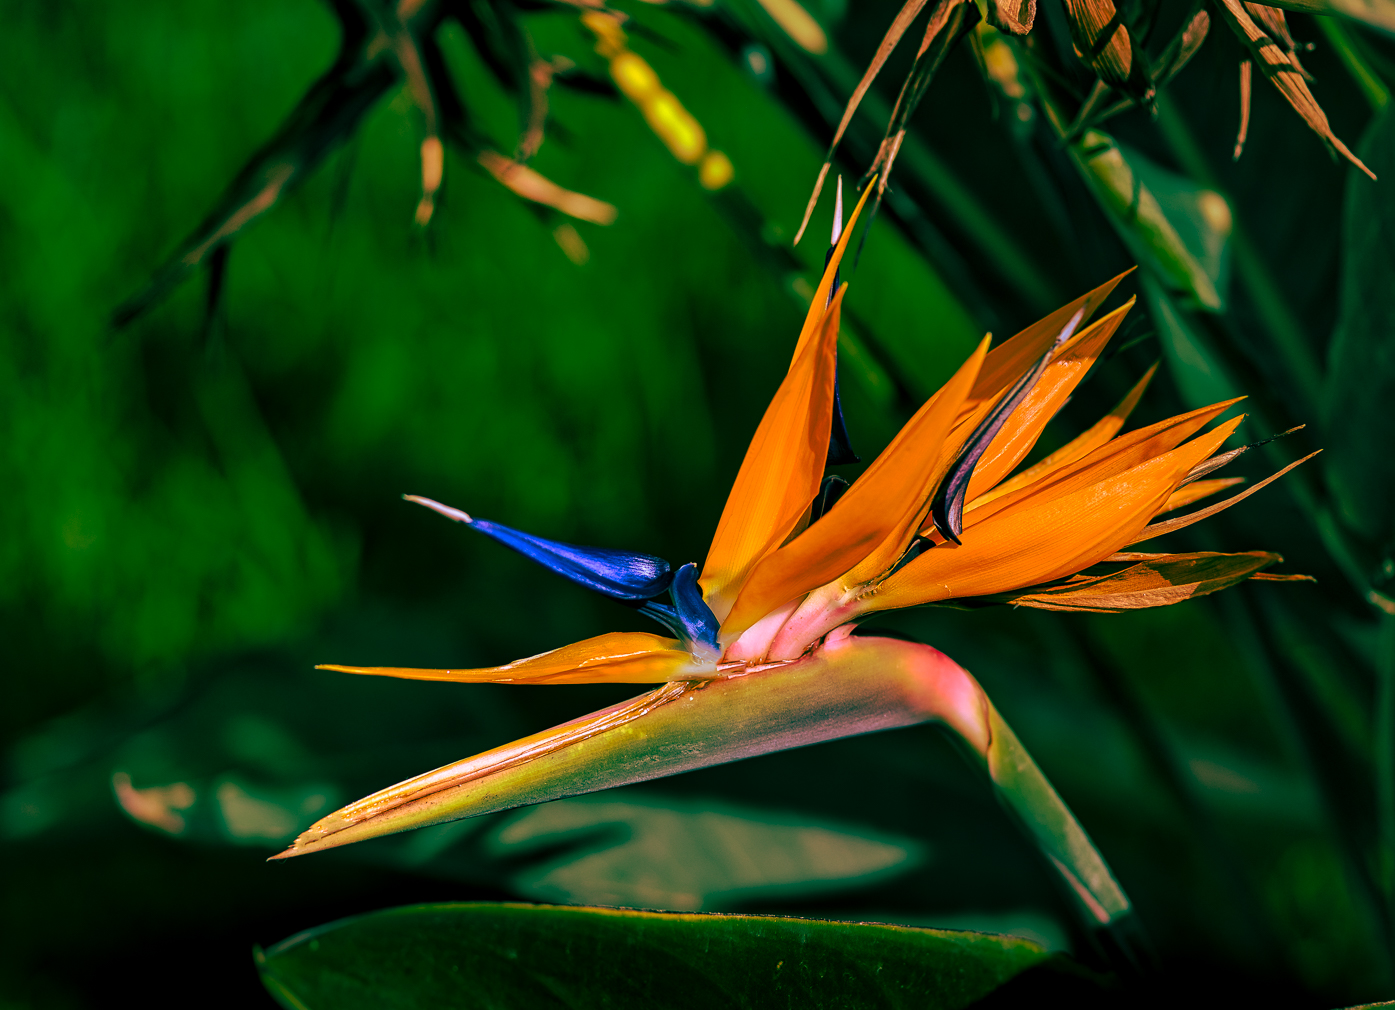 photographer StudioDee still life modelling photo. strelitzia bird of paradise flower.